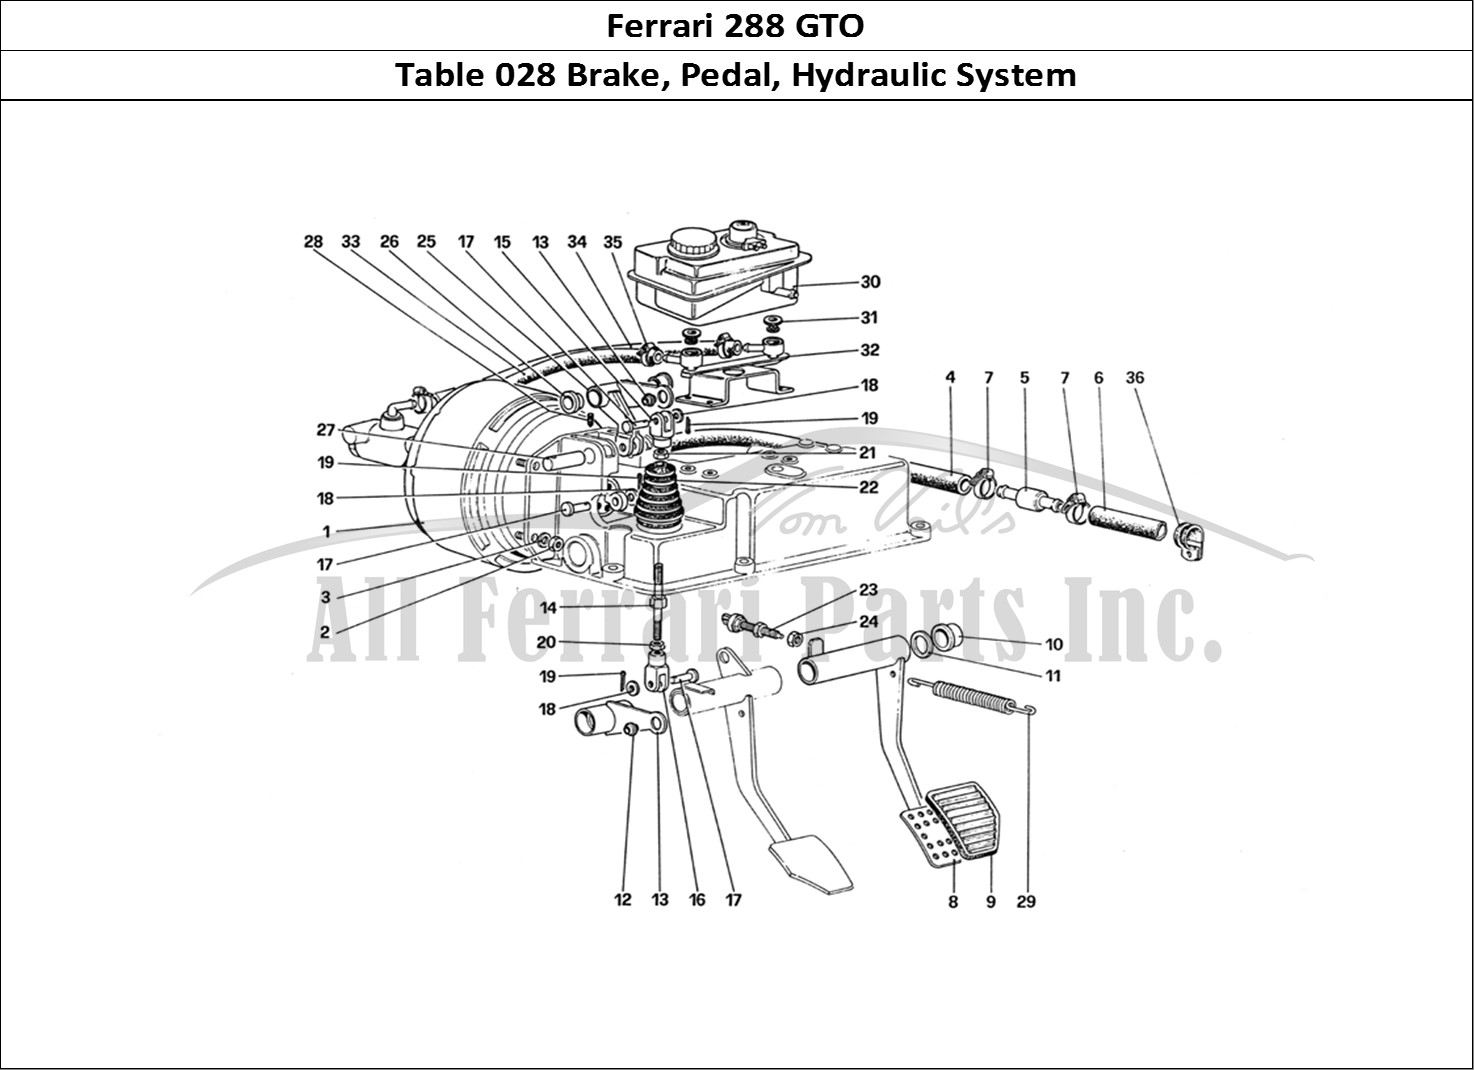 Ferrari Parts Ferrari 288 GTO Page 028 Brake Hydraulic System